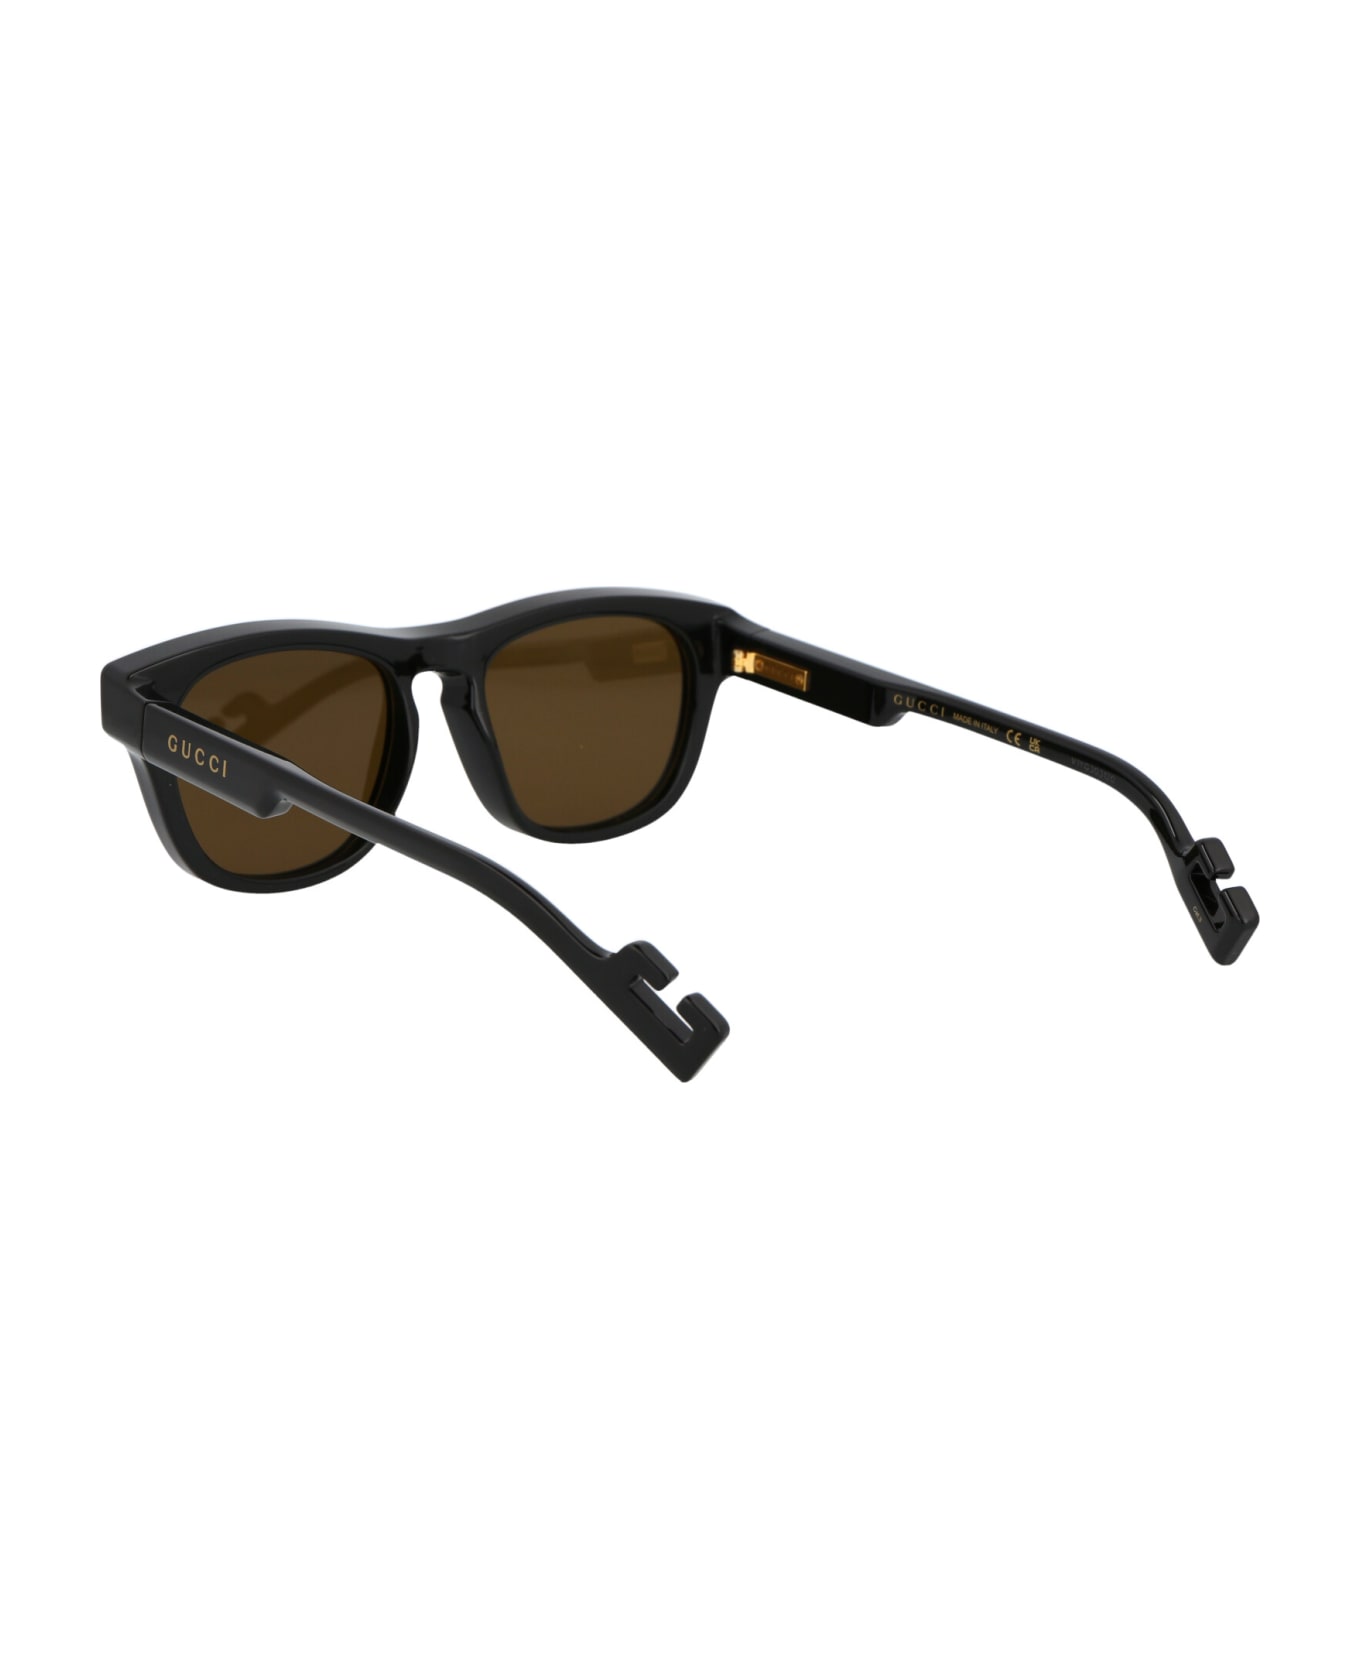 Gucci Eyewear Gg1238s Sunglasses have - 004 BLACK BLACK BROWN